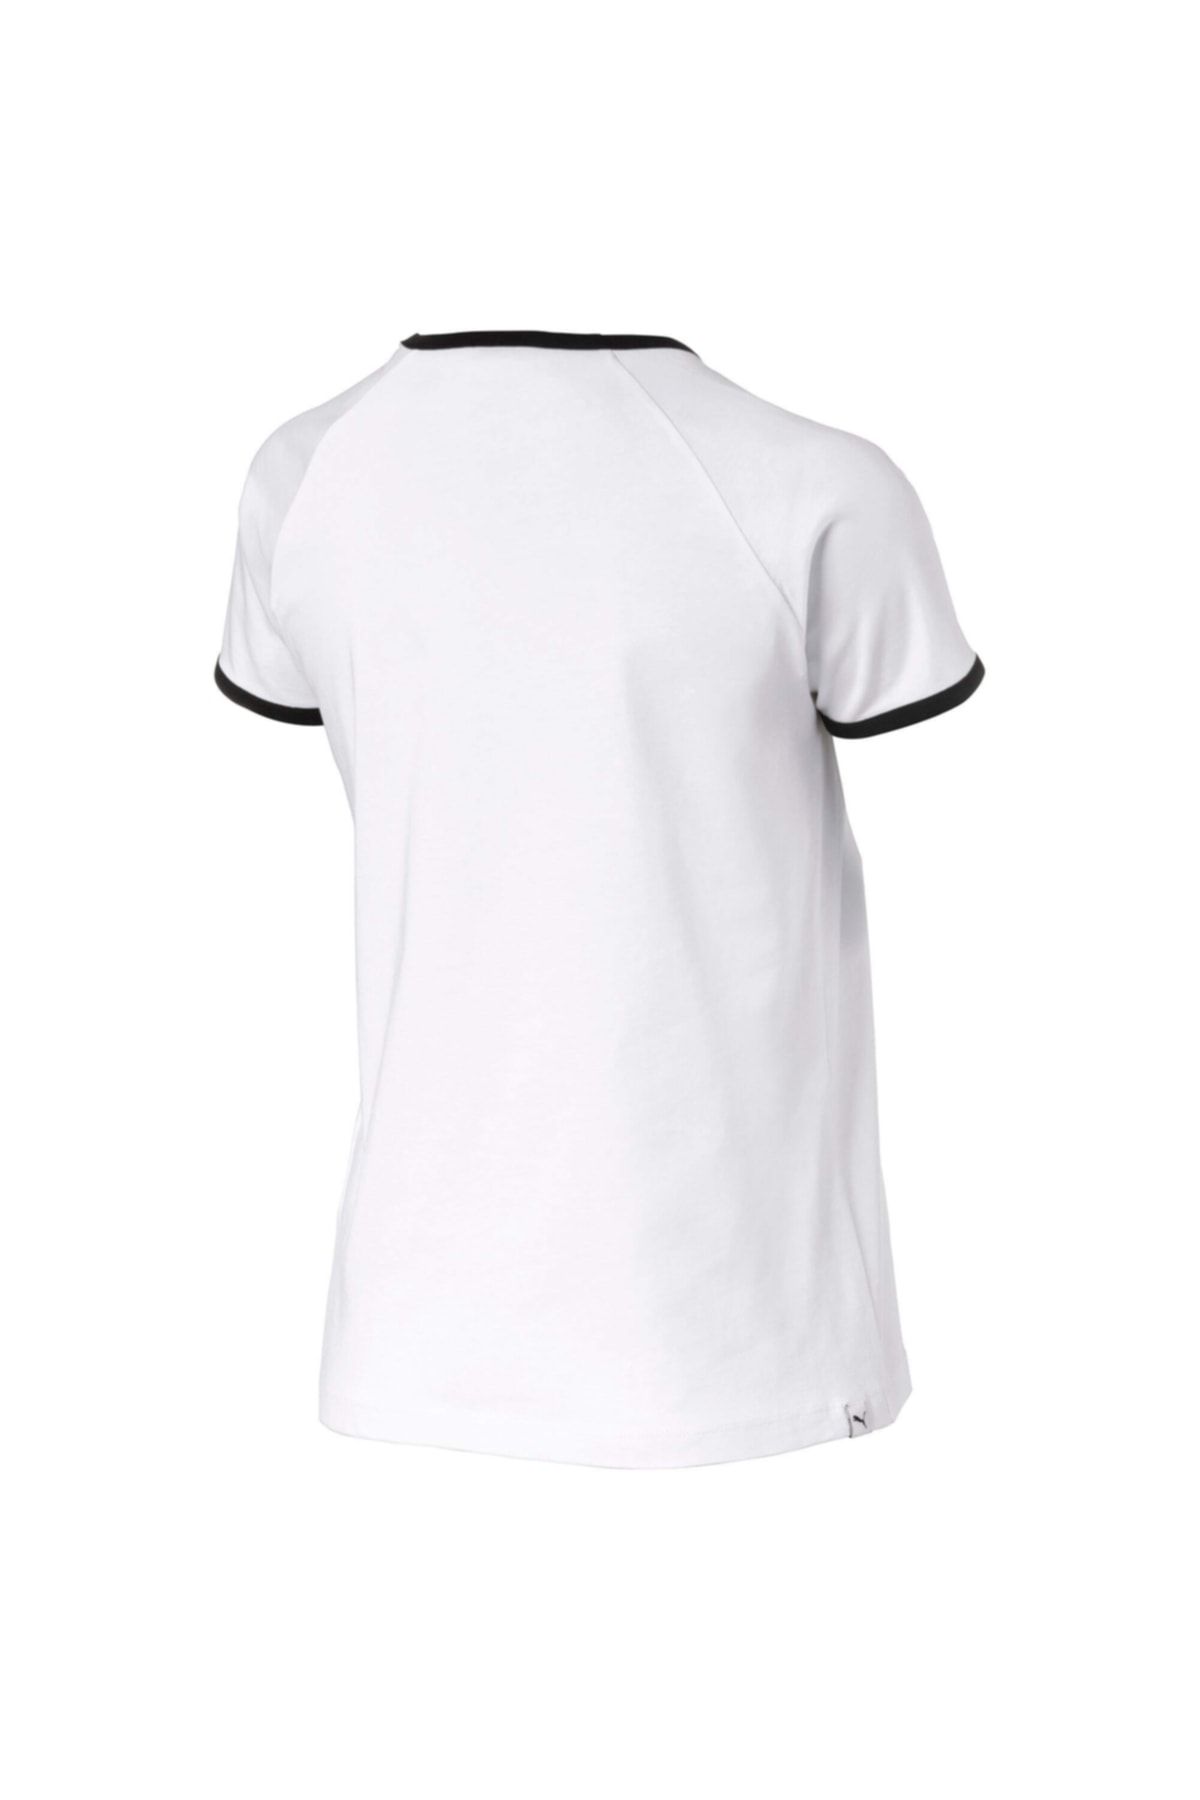 Puma RINGER TEE 1 Beyaz Kadın T-Shirt 101119494